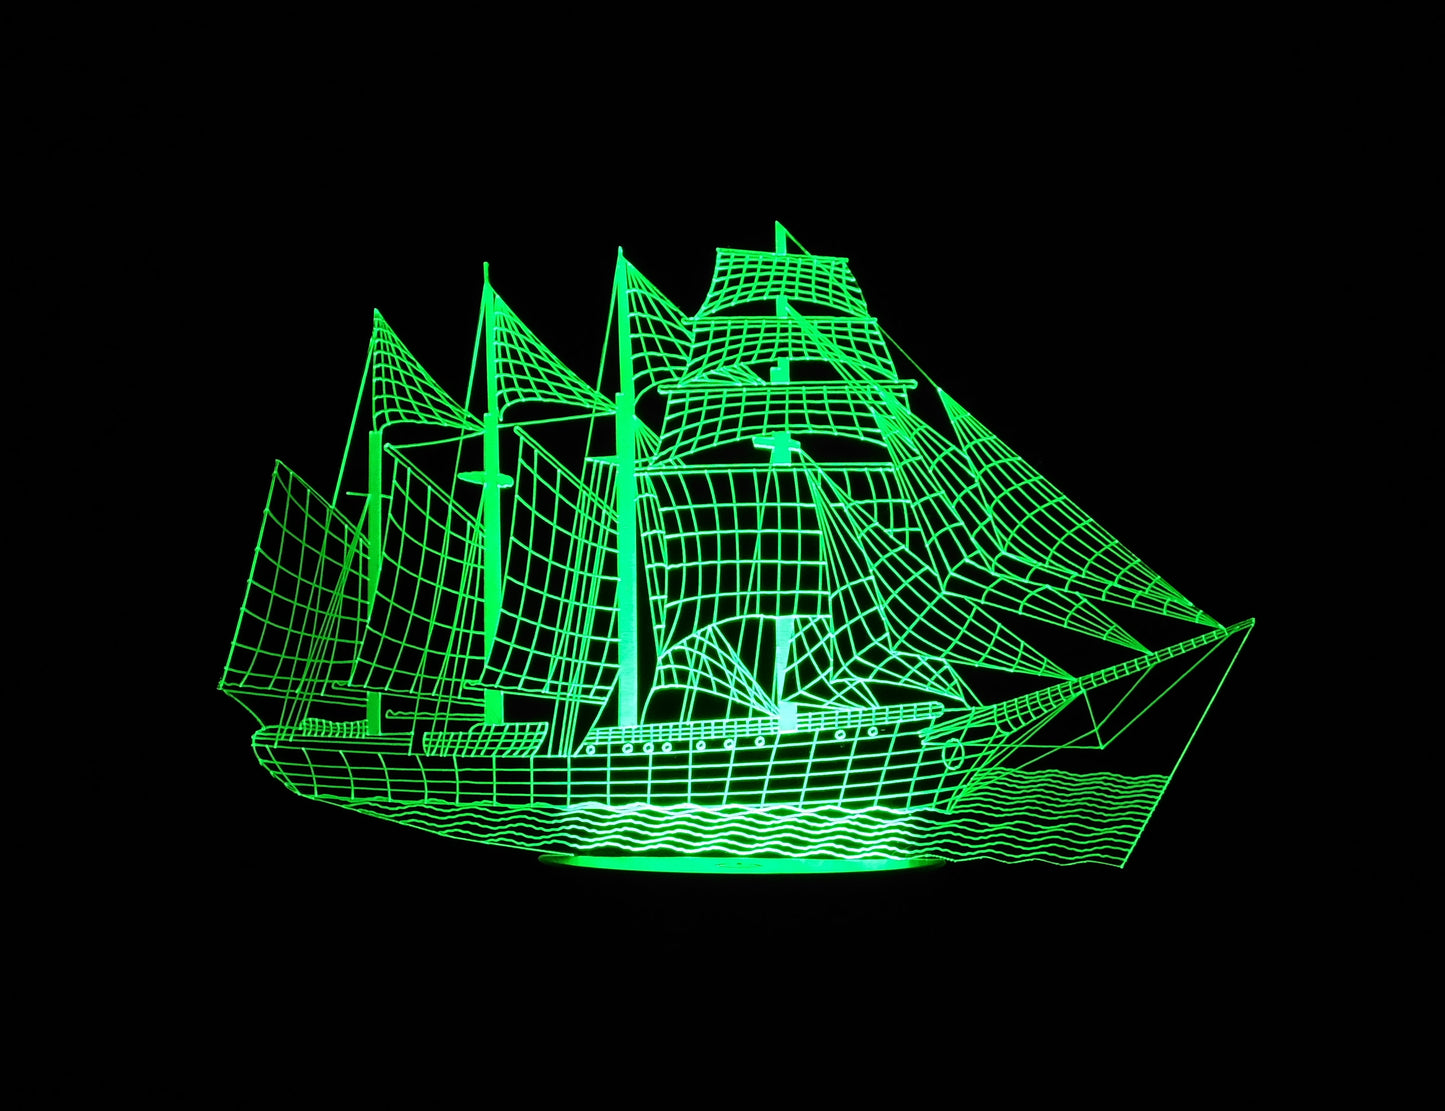 Sailing Ship 3-D Optical Illusion LED Desk, Table, Night Lamp